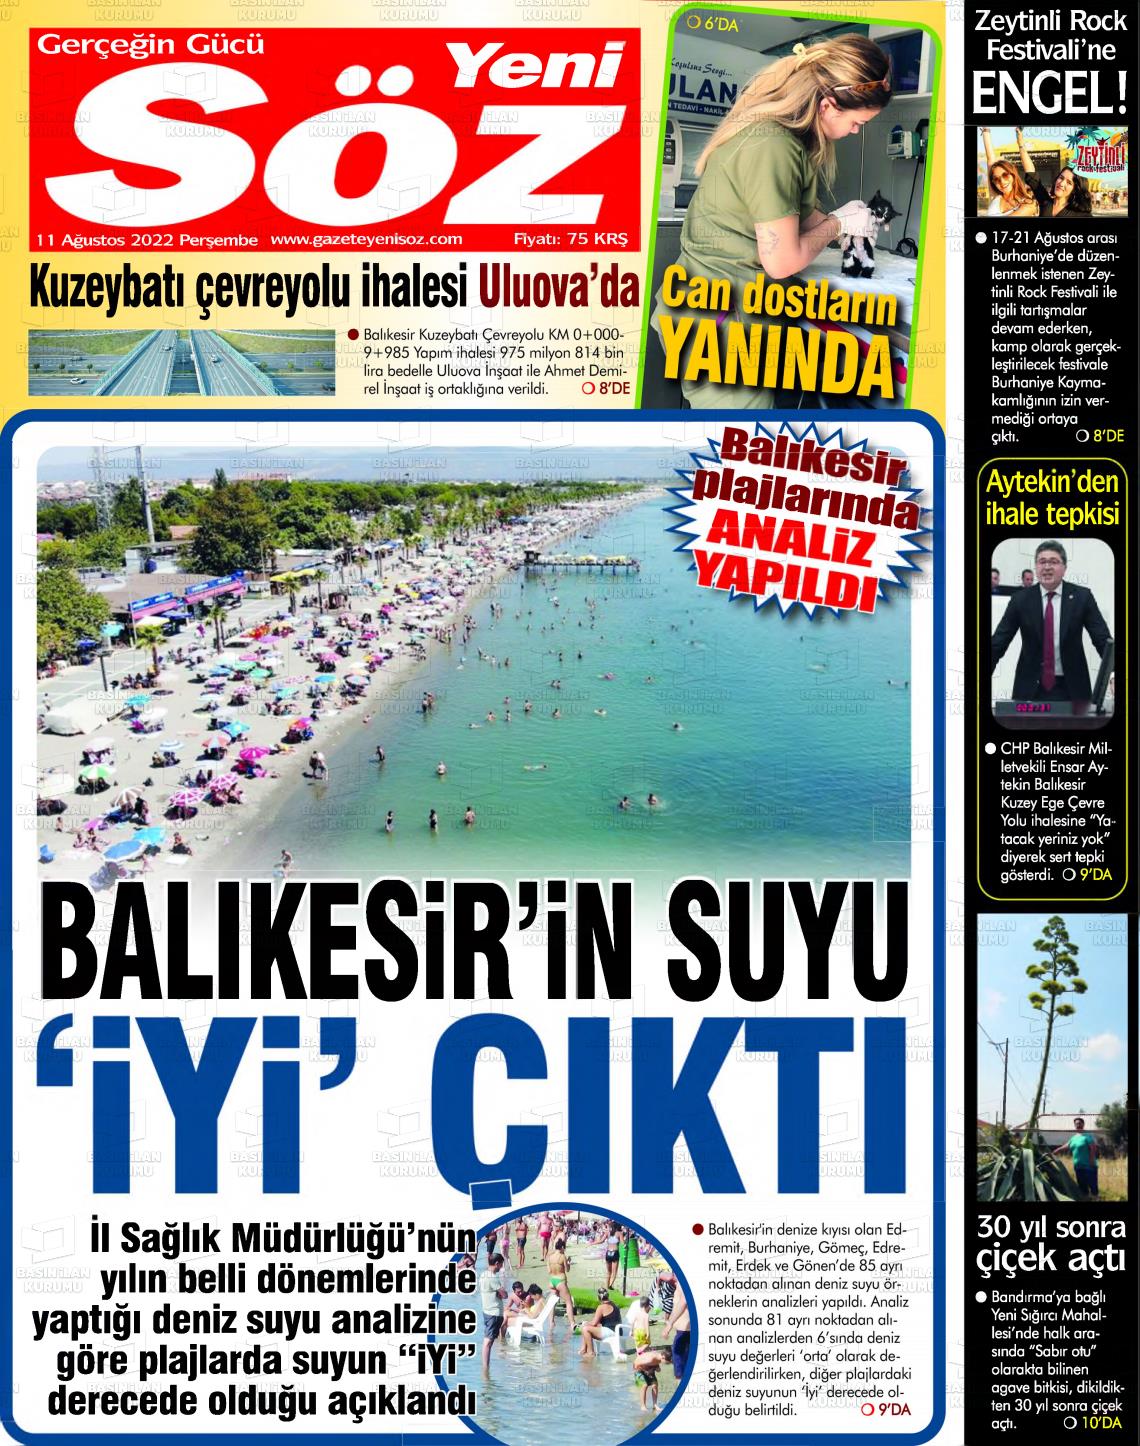 11 Ağustos 2022 Yeni Söz Gazete Manşeti